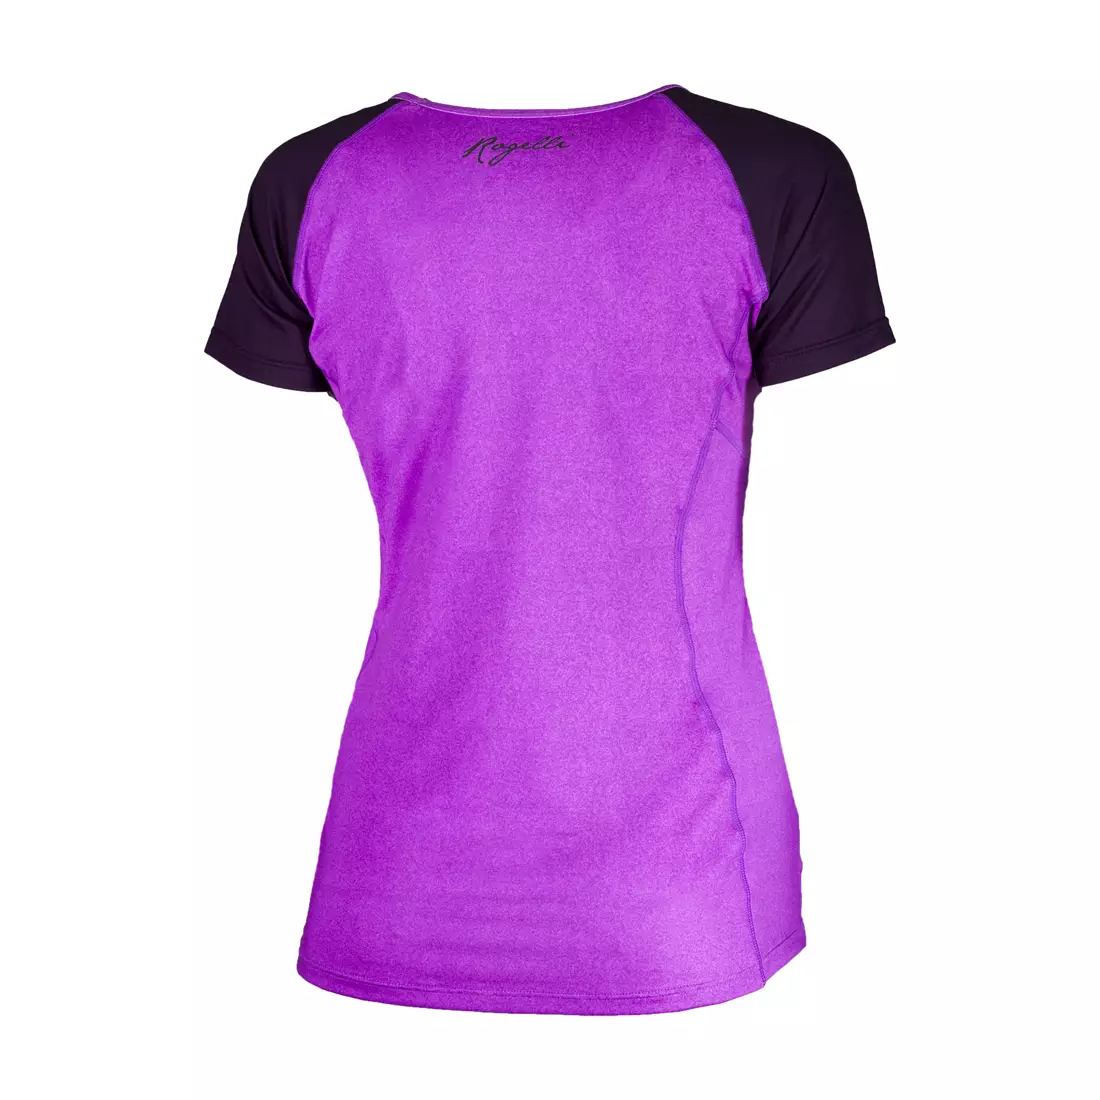 ROGELLI RUN SAMUELA 840.262 - women's running T-shirt, color: purple